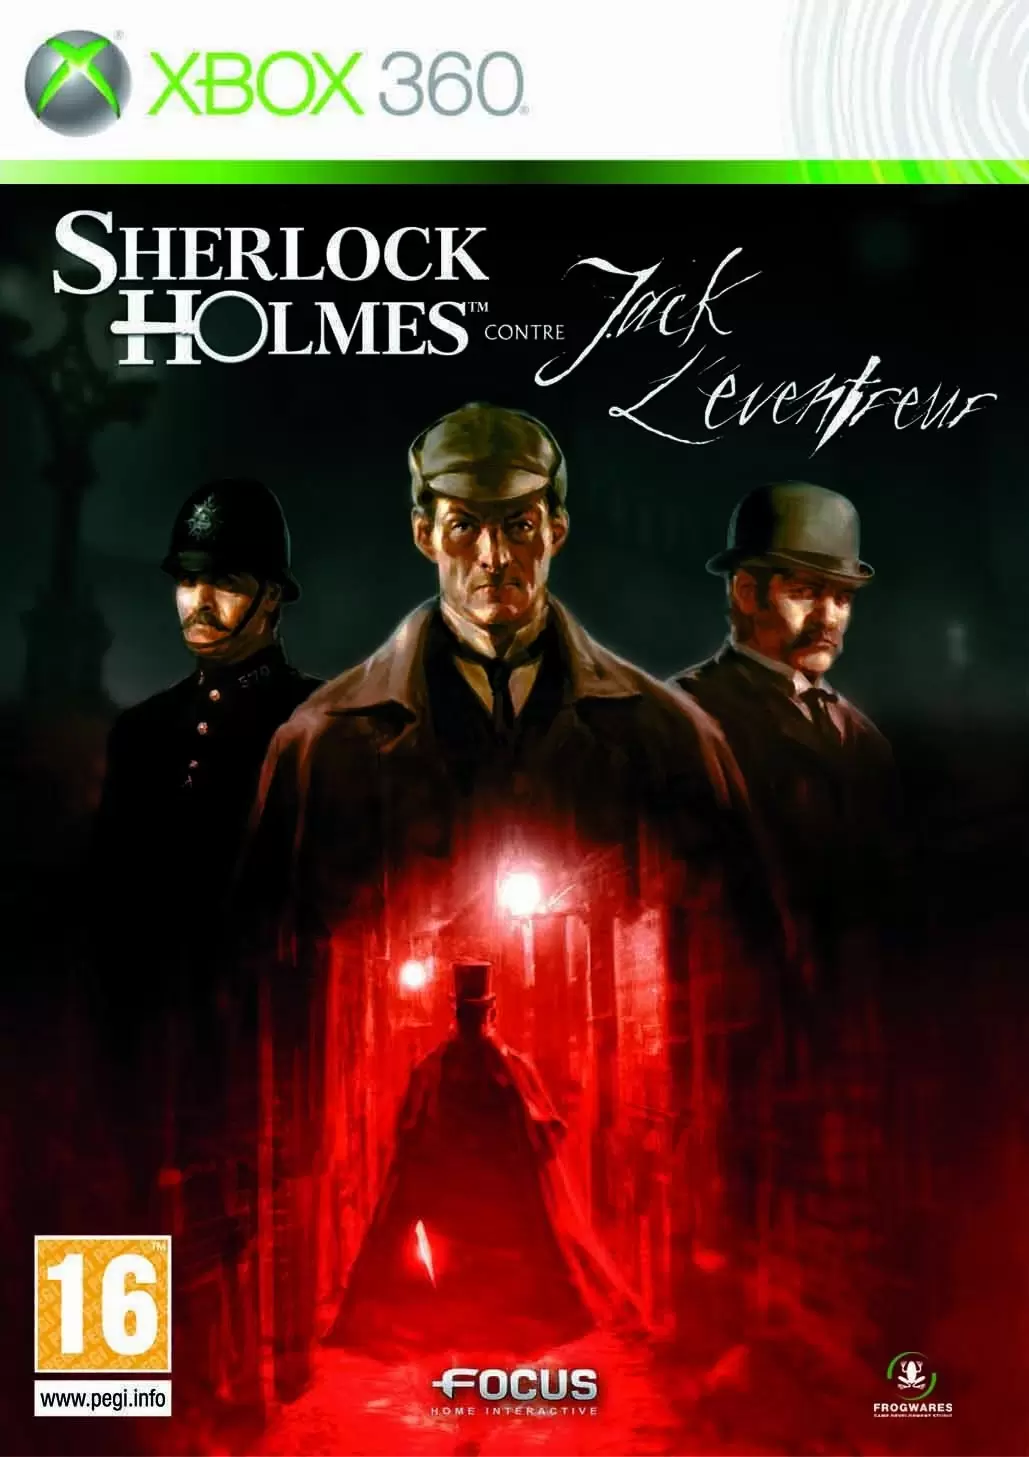 XBOX 360 Games - Sherlock Holmes Contre Jack L\'eventreur